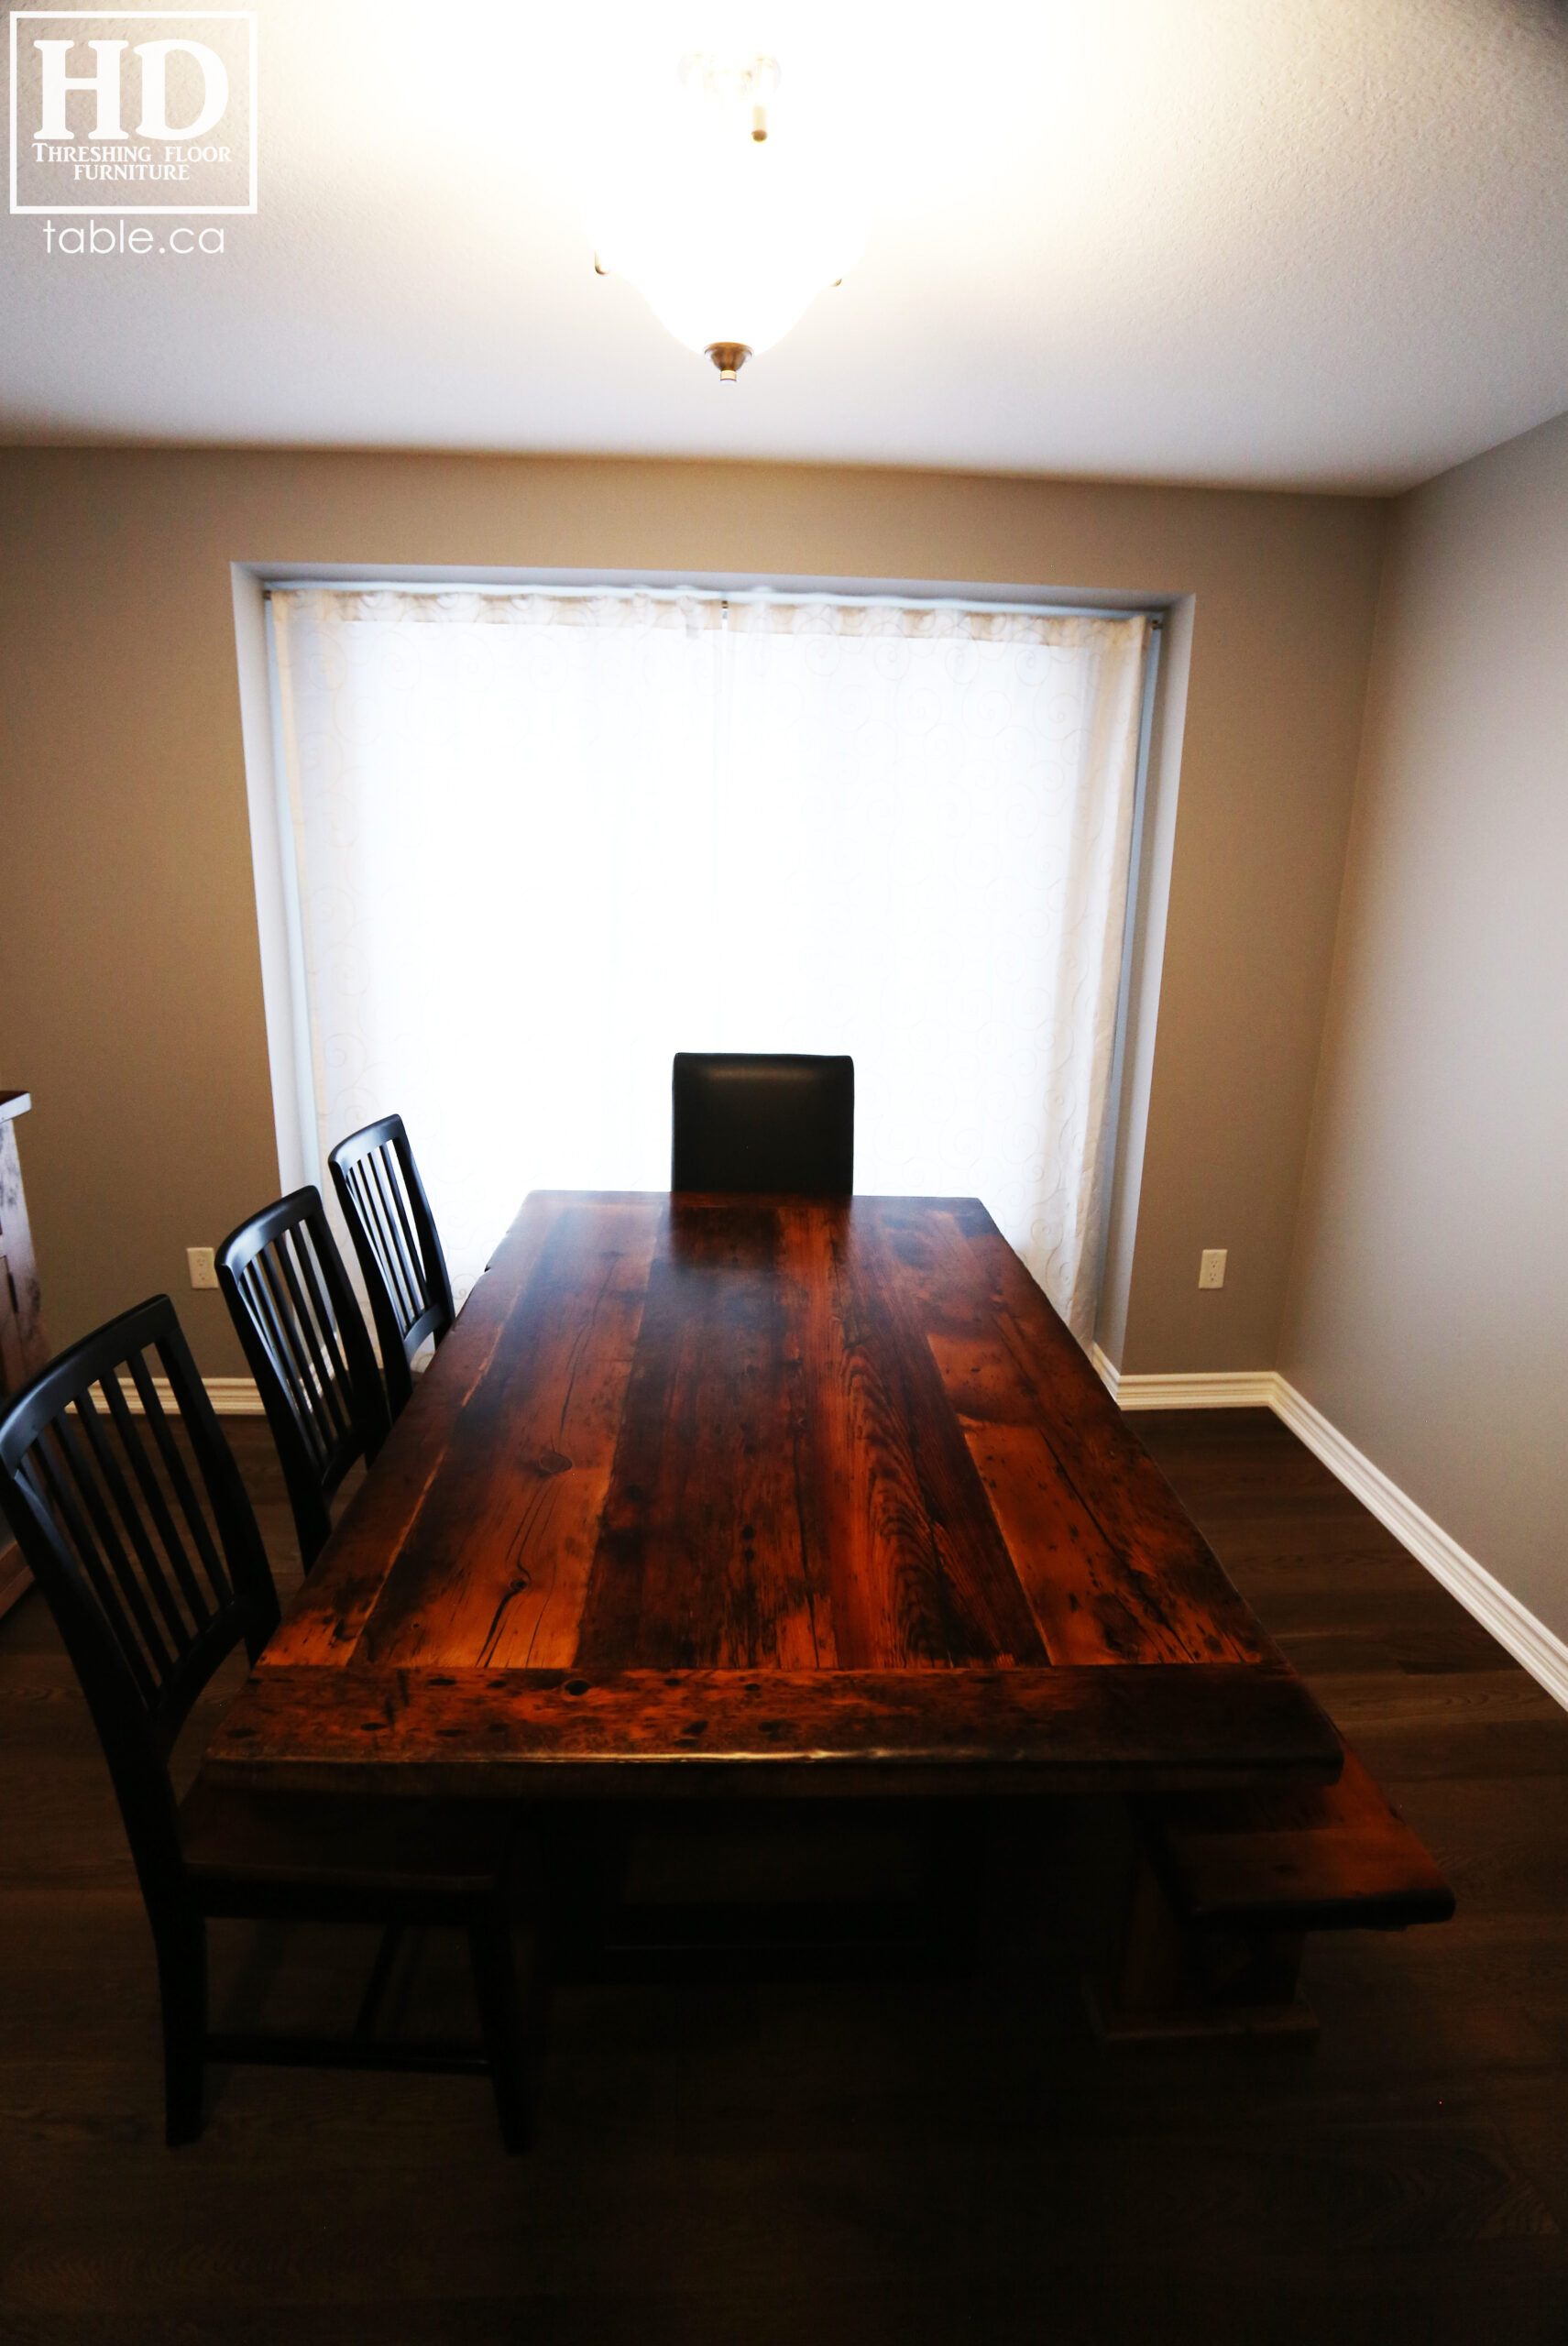 Rustic Barnwood Table by HD Threshing Floor Furniture / www.table.ca